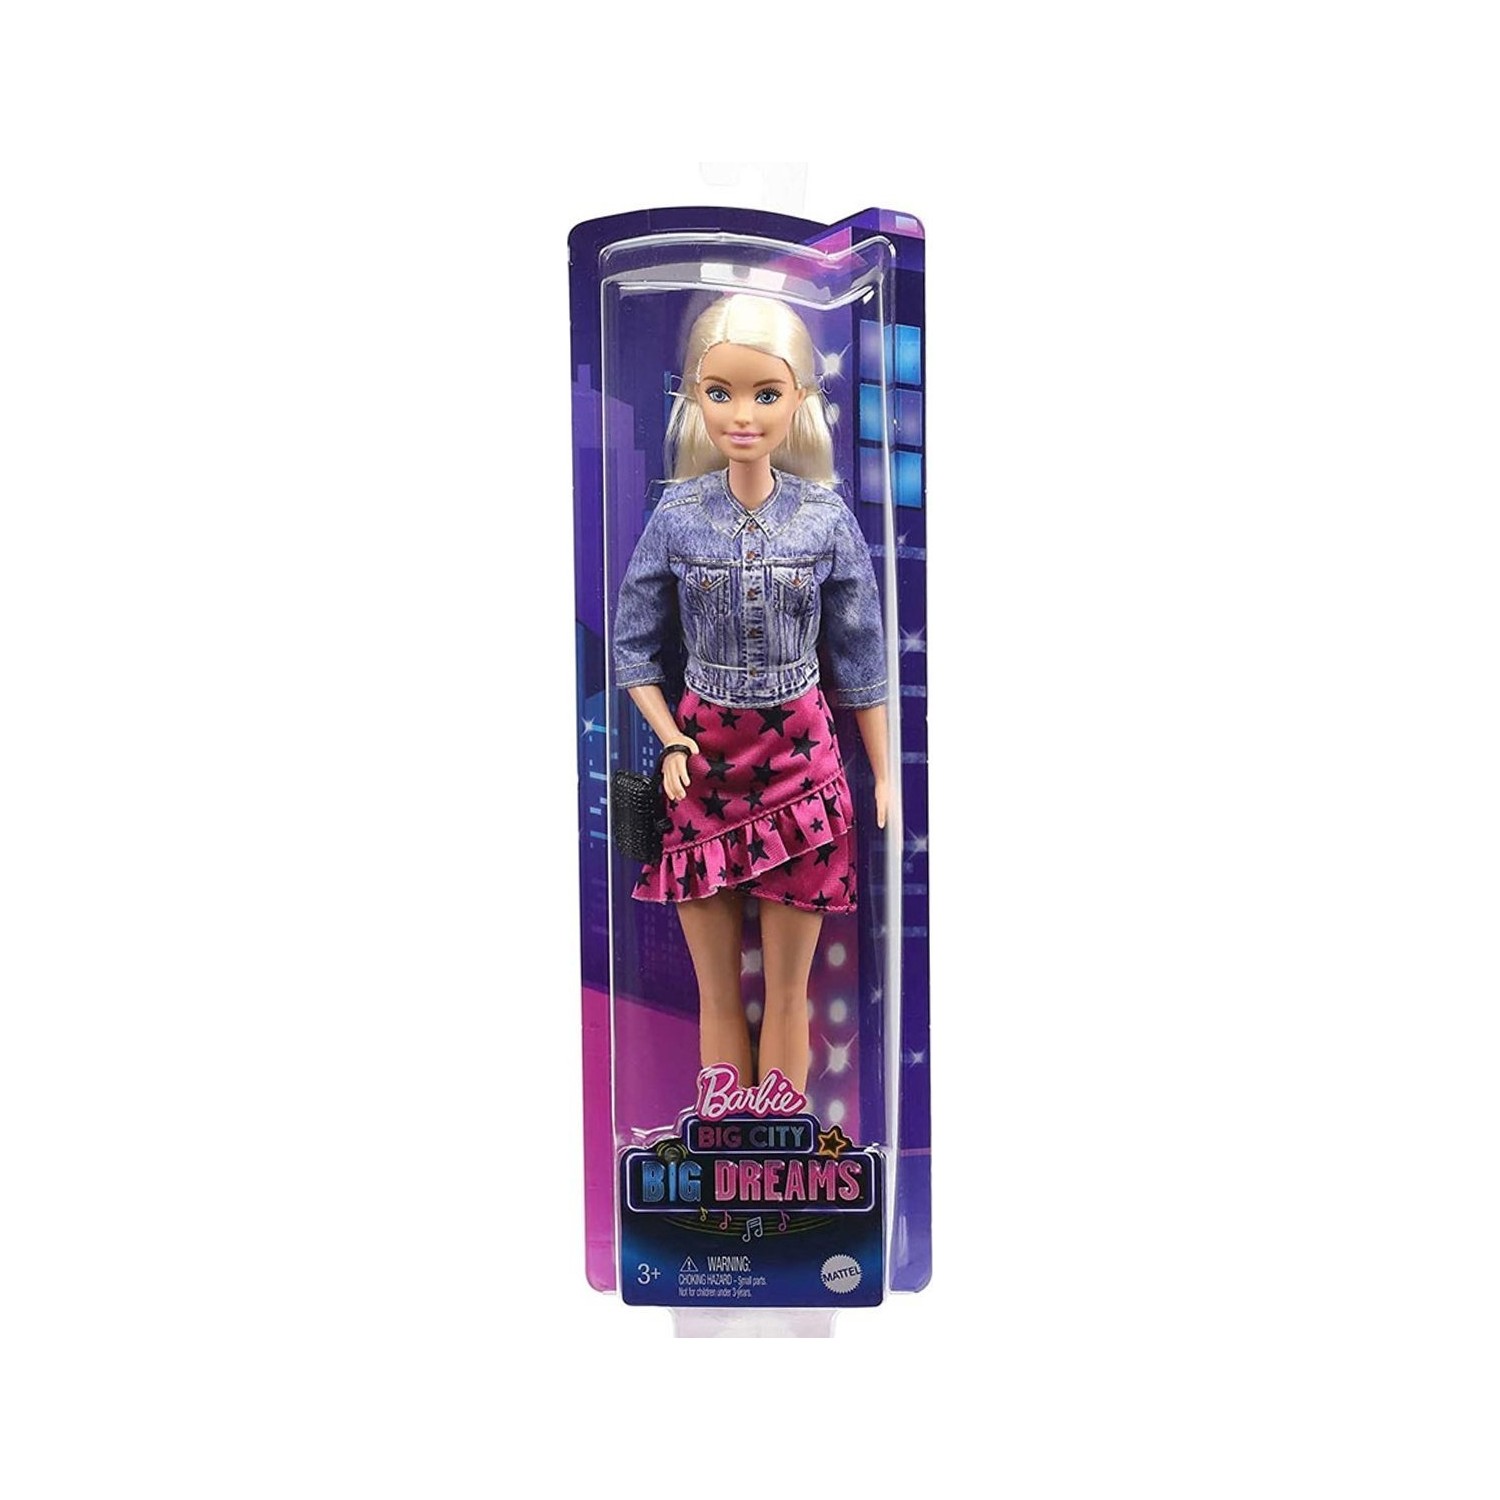 Игровой набор Barbie готовит лапшу GHK43 игровой набор barbie home accessory packs grg56